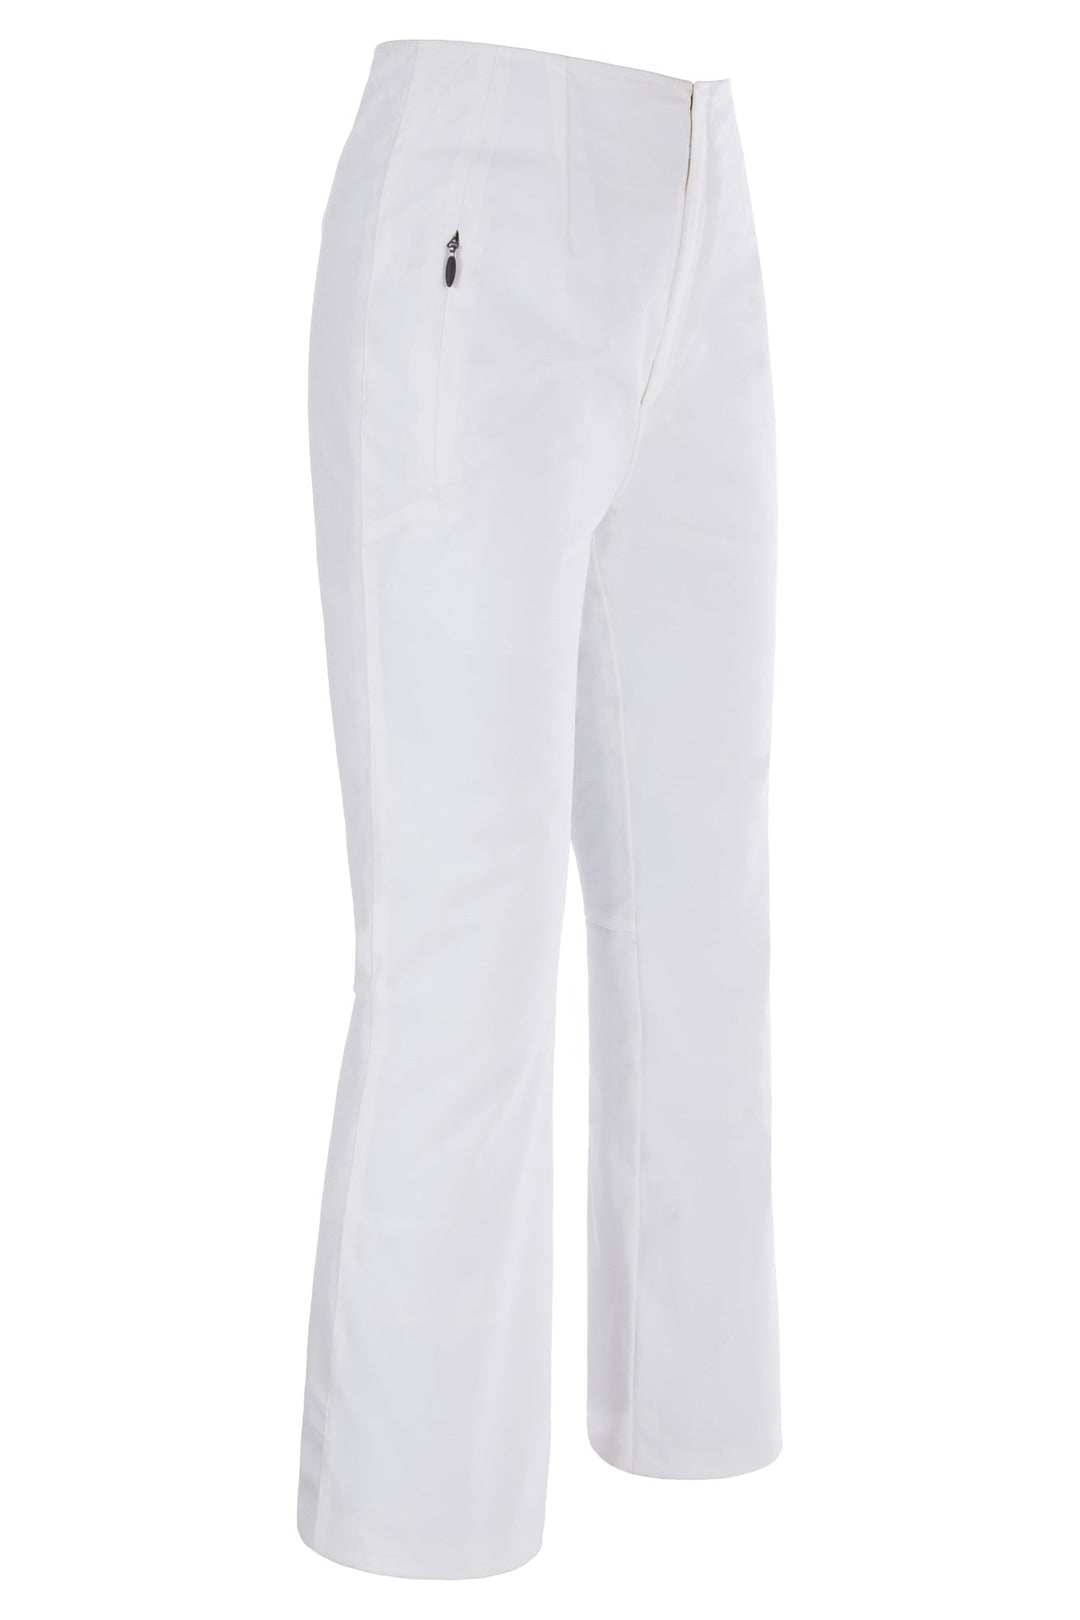 HYPRAR High Waist Front Lined Ski Pants, Functional Pants